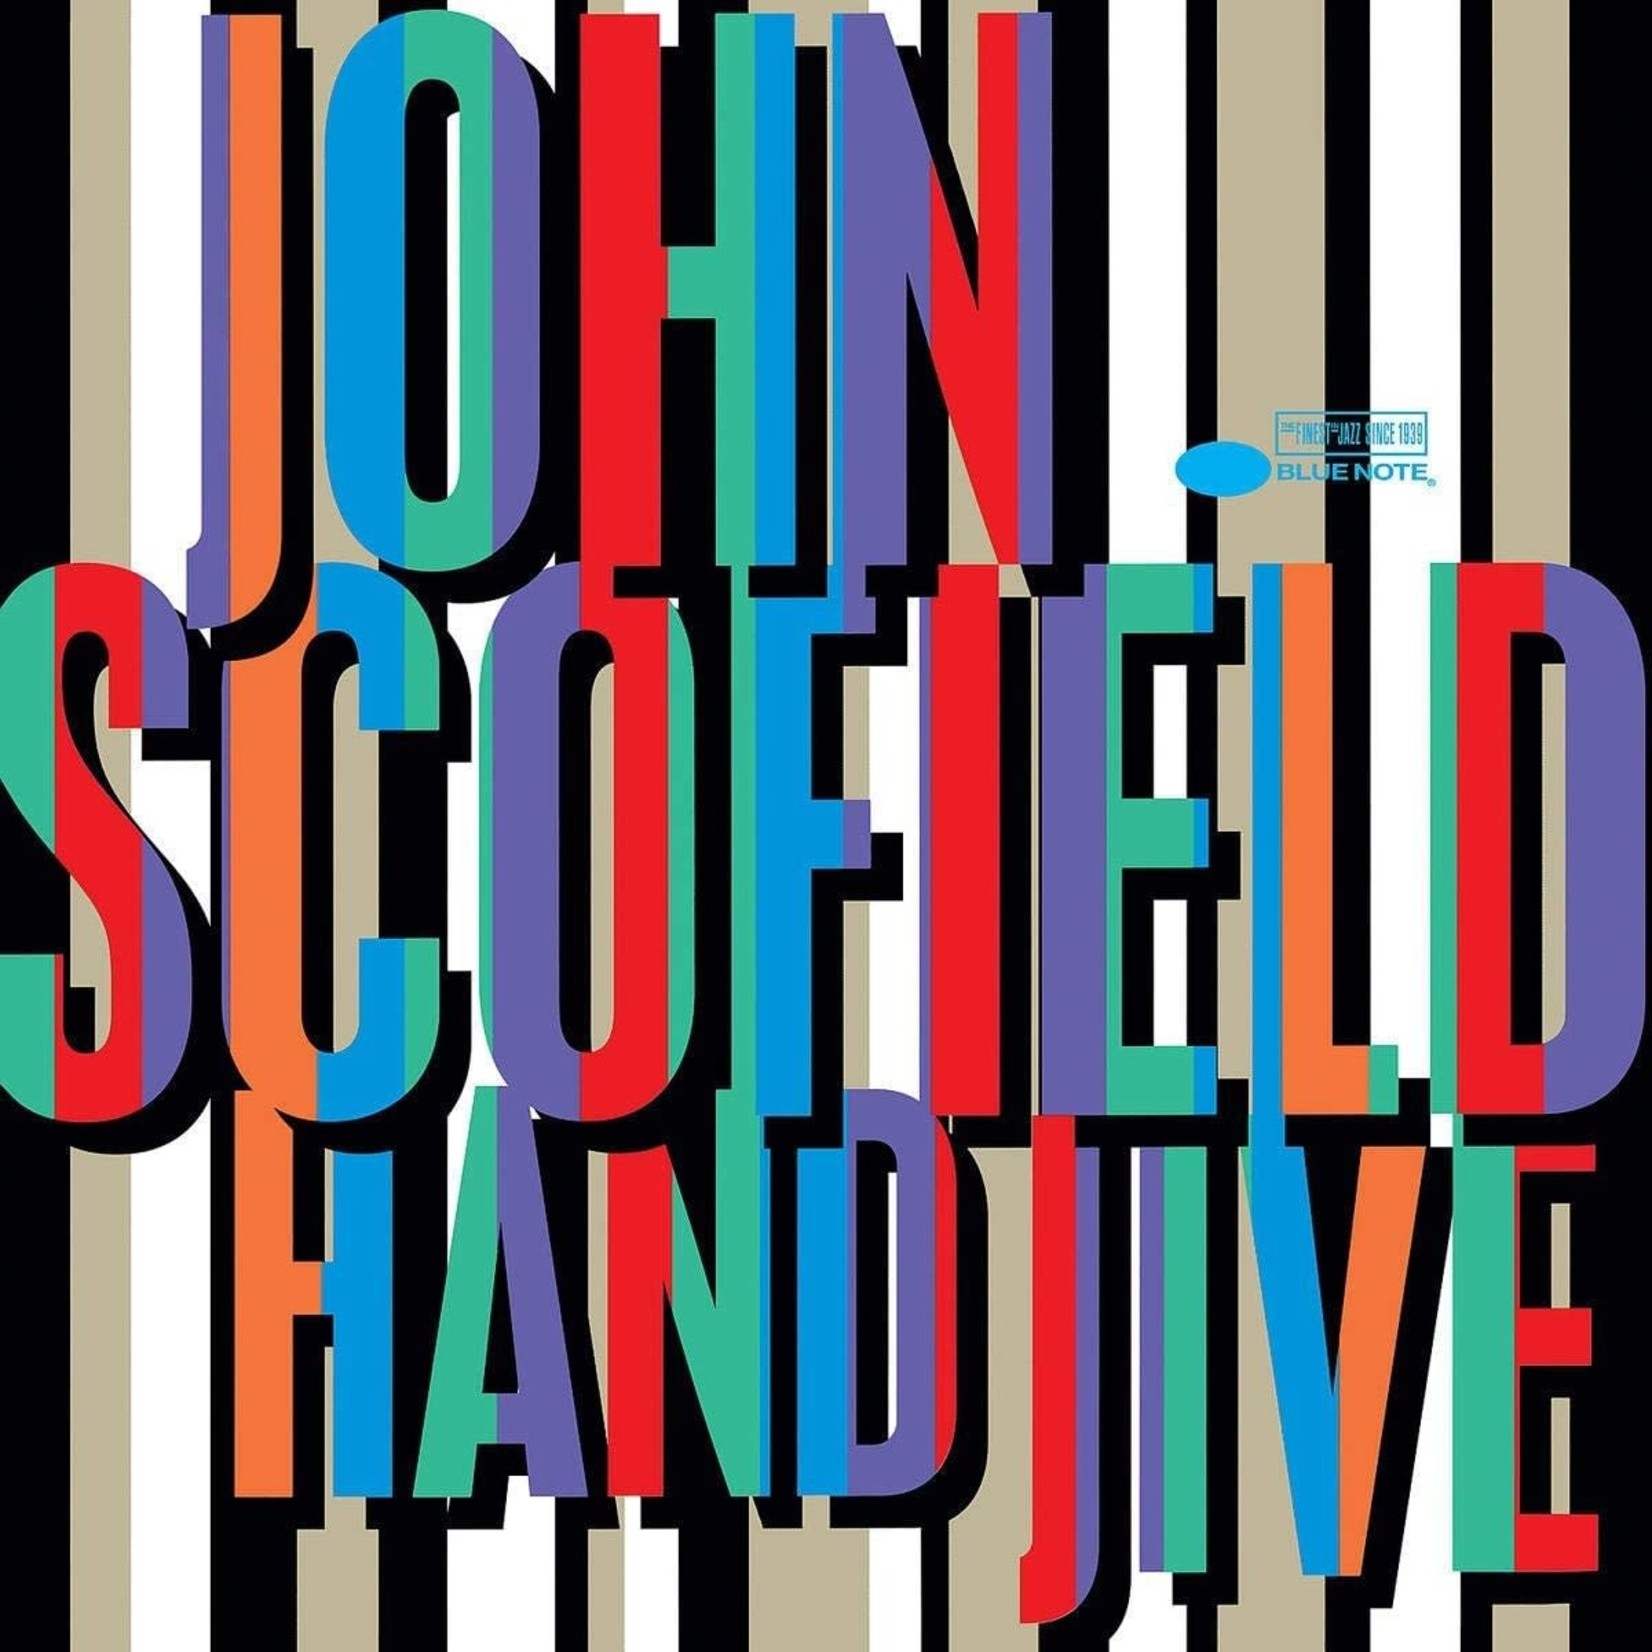 [New] John Scofield - Hand Jive (Blue Note 80 Series) (2LP)